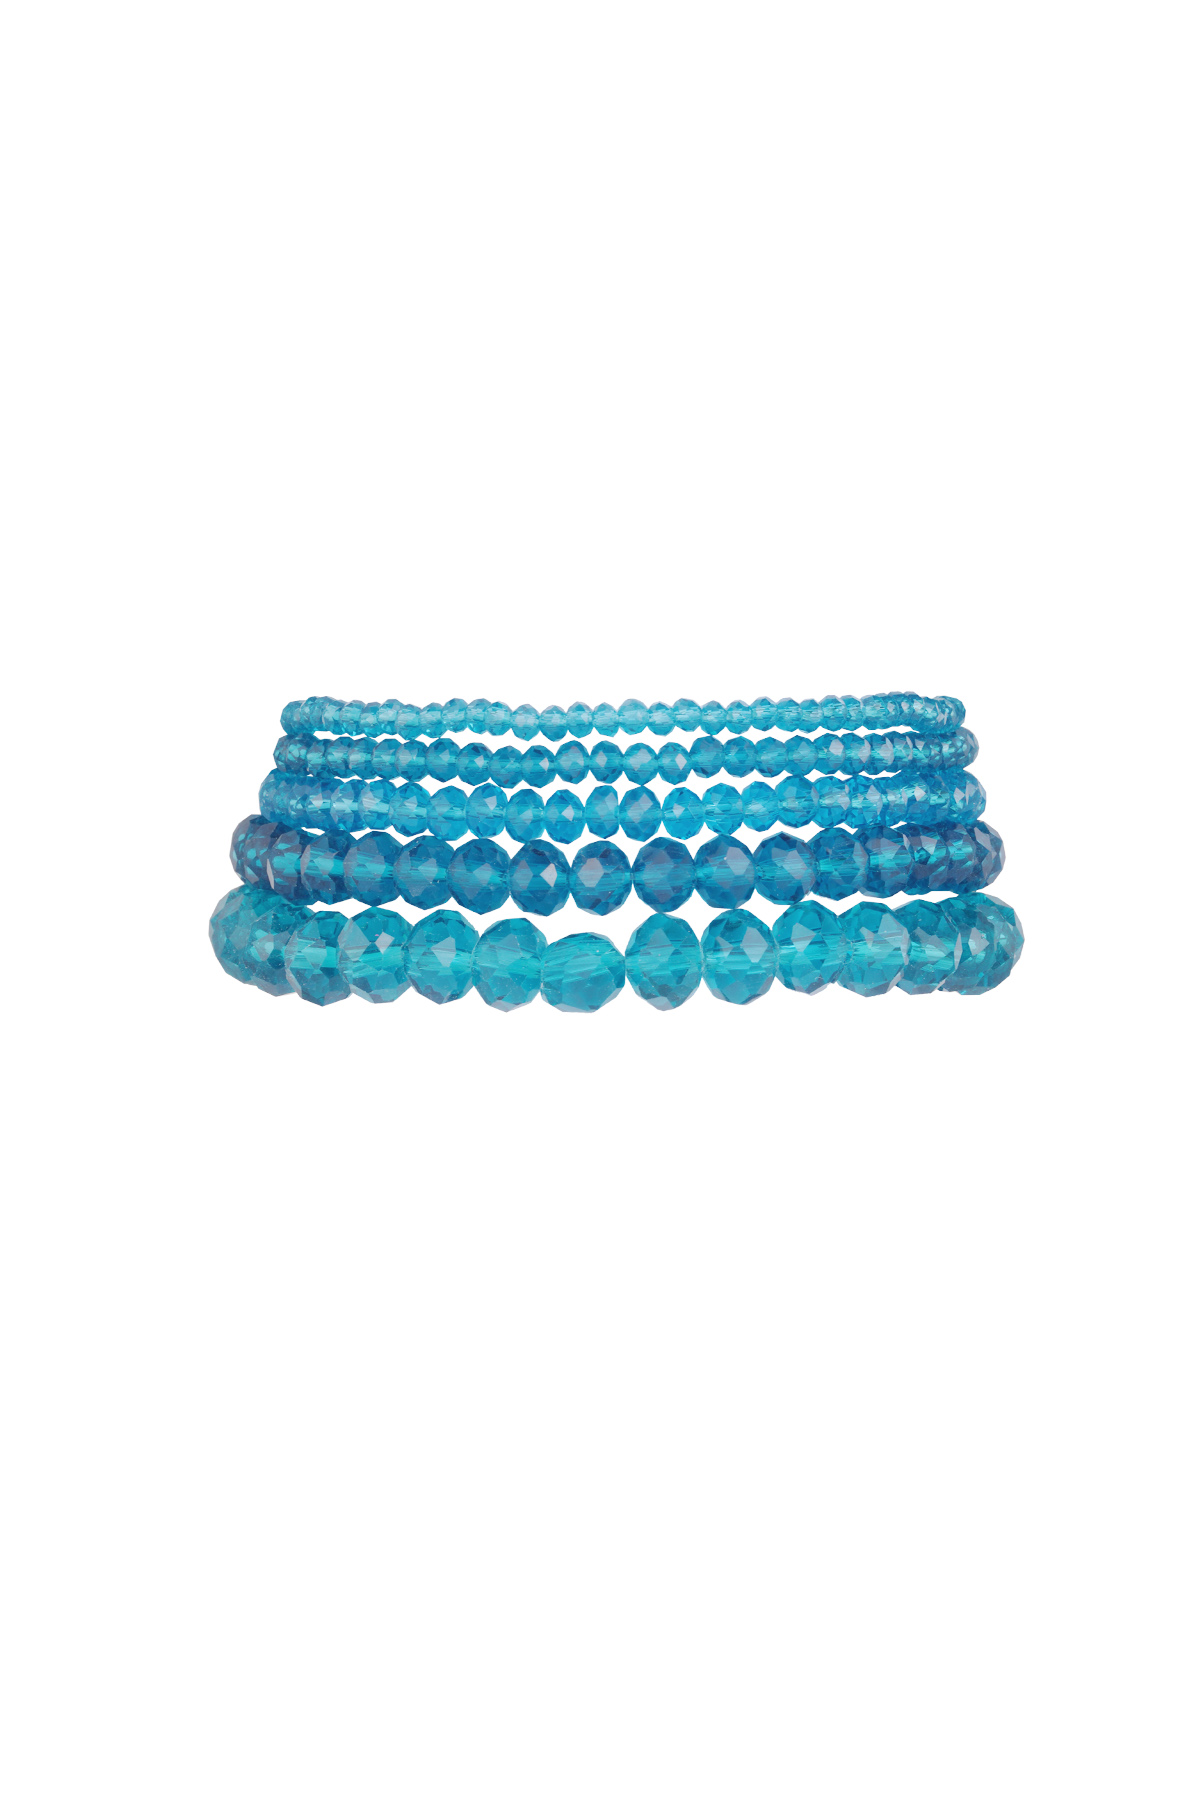 Set of 5 crystal bracelets ocean - turquiose